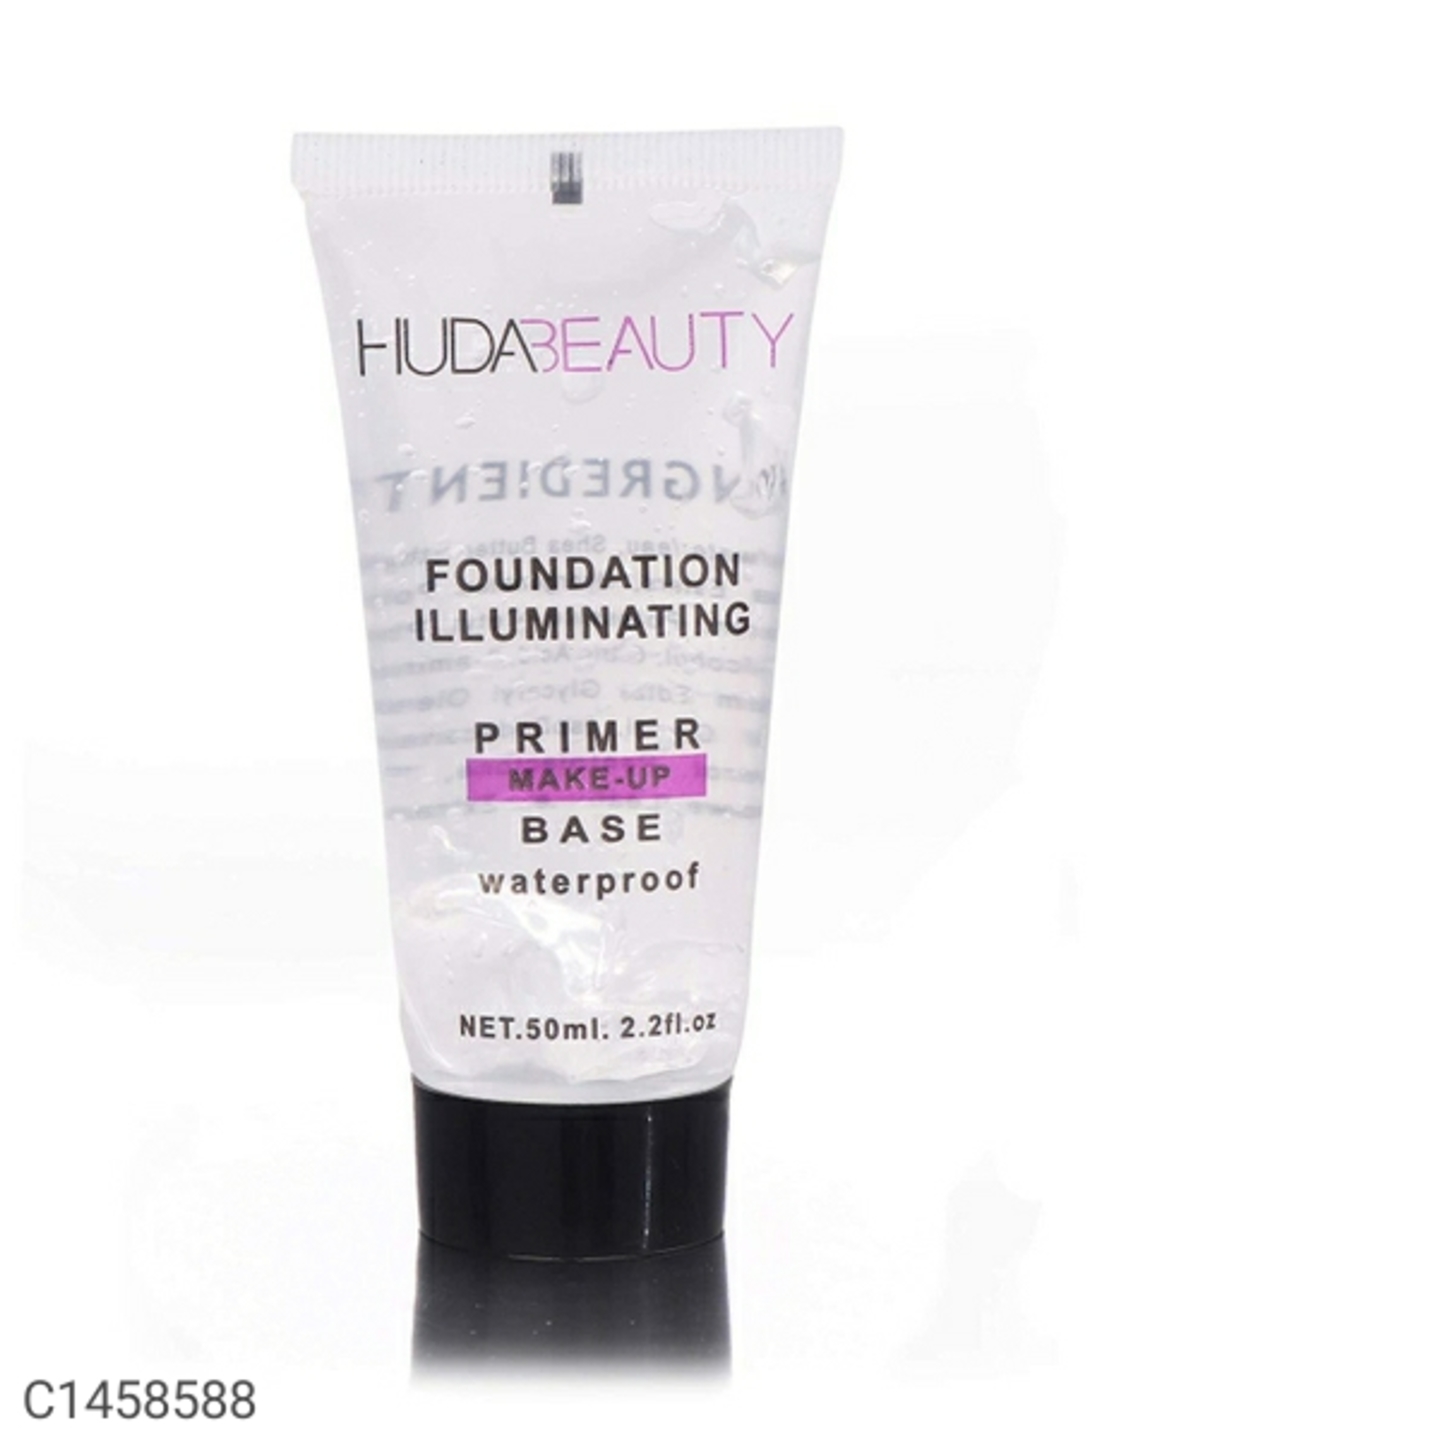 Huda Beauty Primer Foundation Illuminating Waterproof (Pack Of 1)